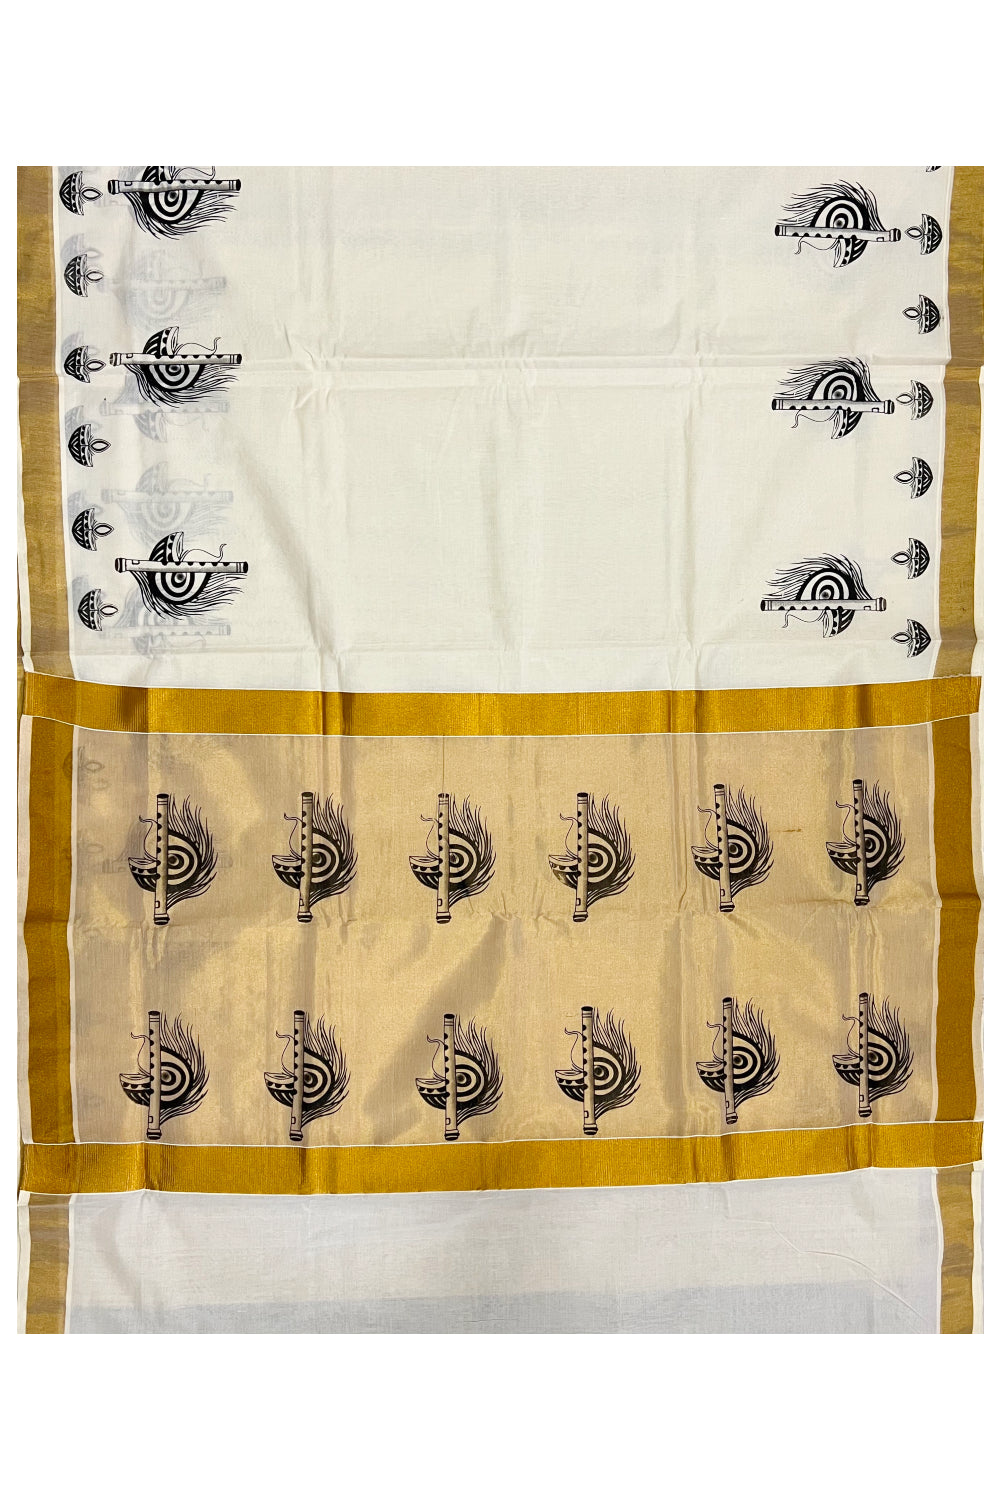 Kerala Cotton Kasavu Saree with Black Feather and Flute Block Prints on Border and Tissue Pallu